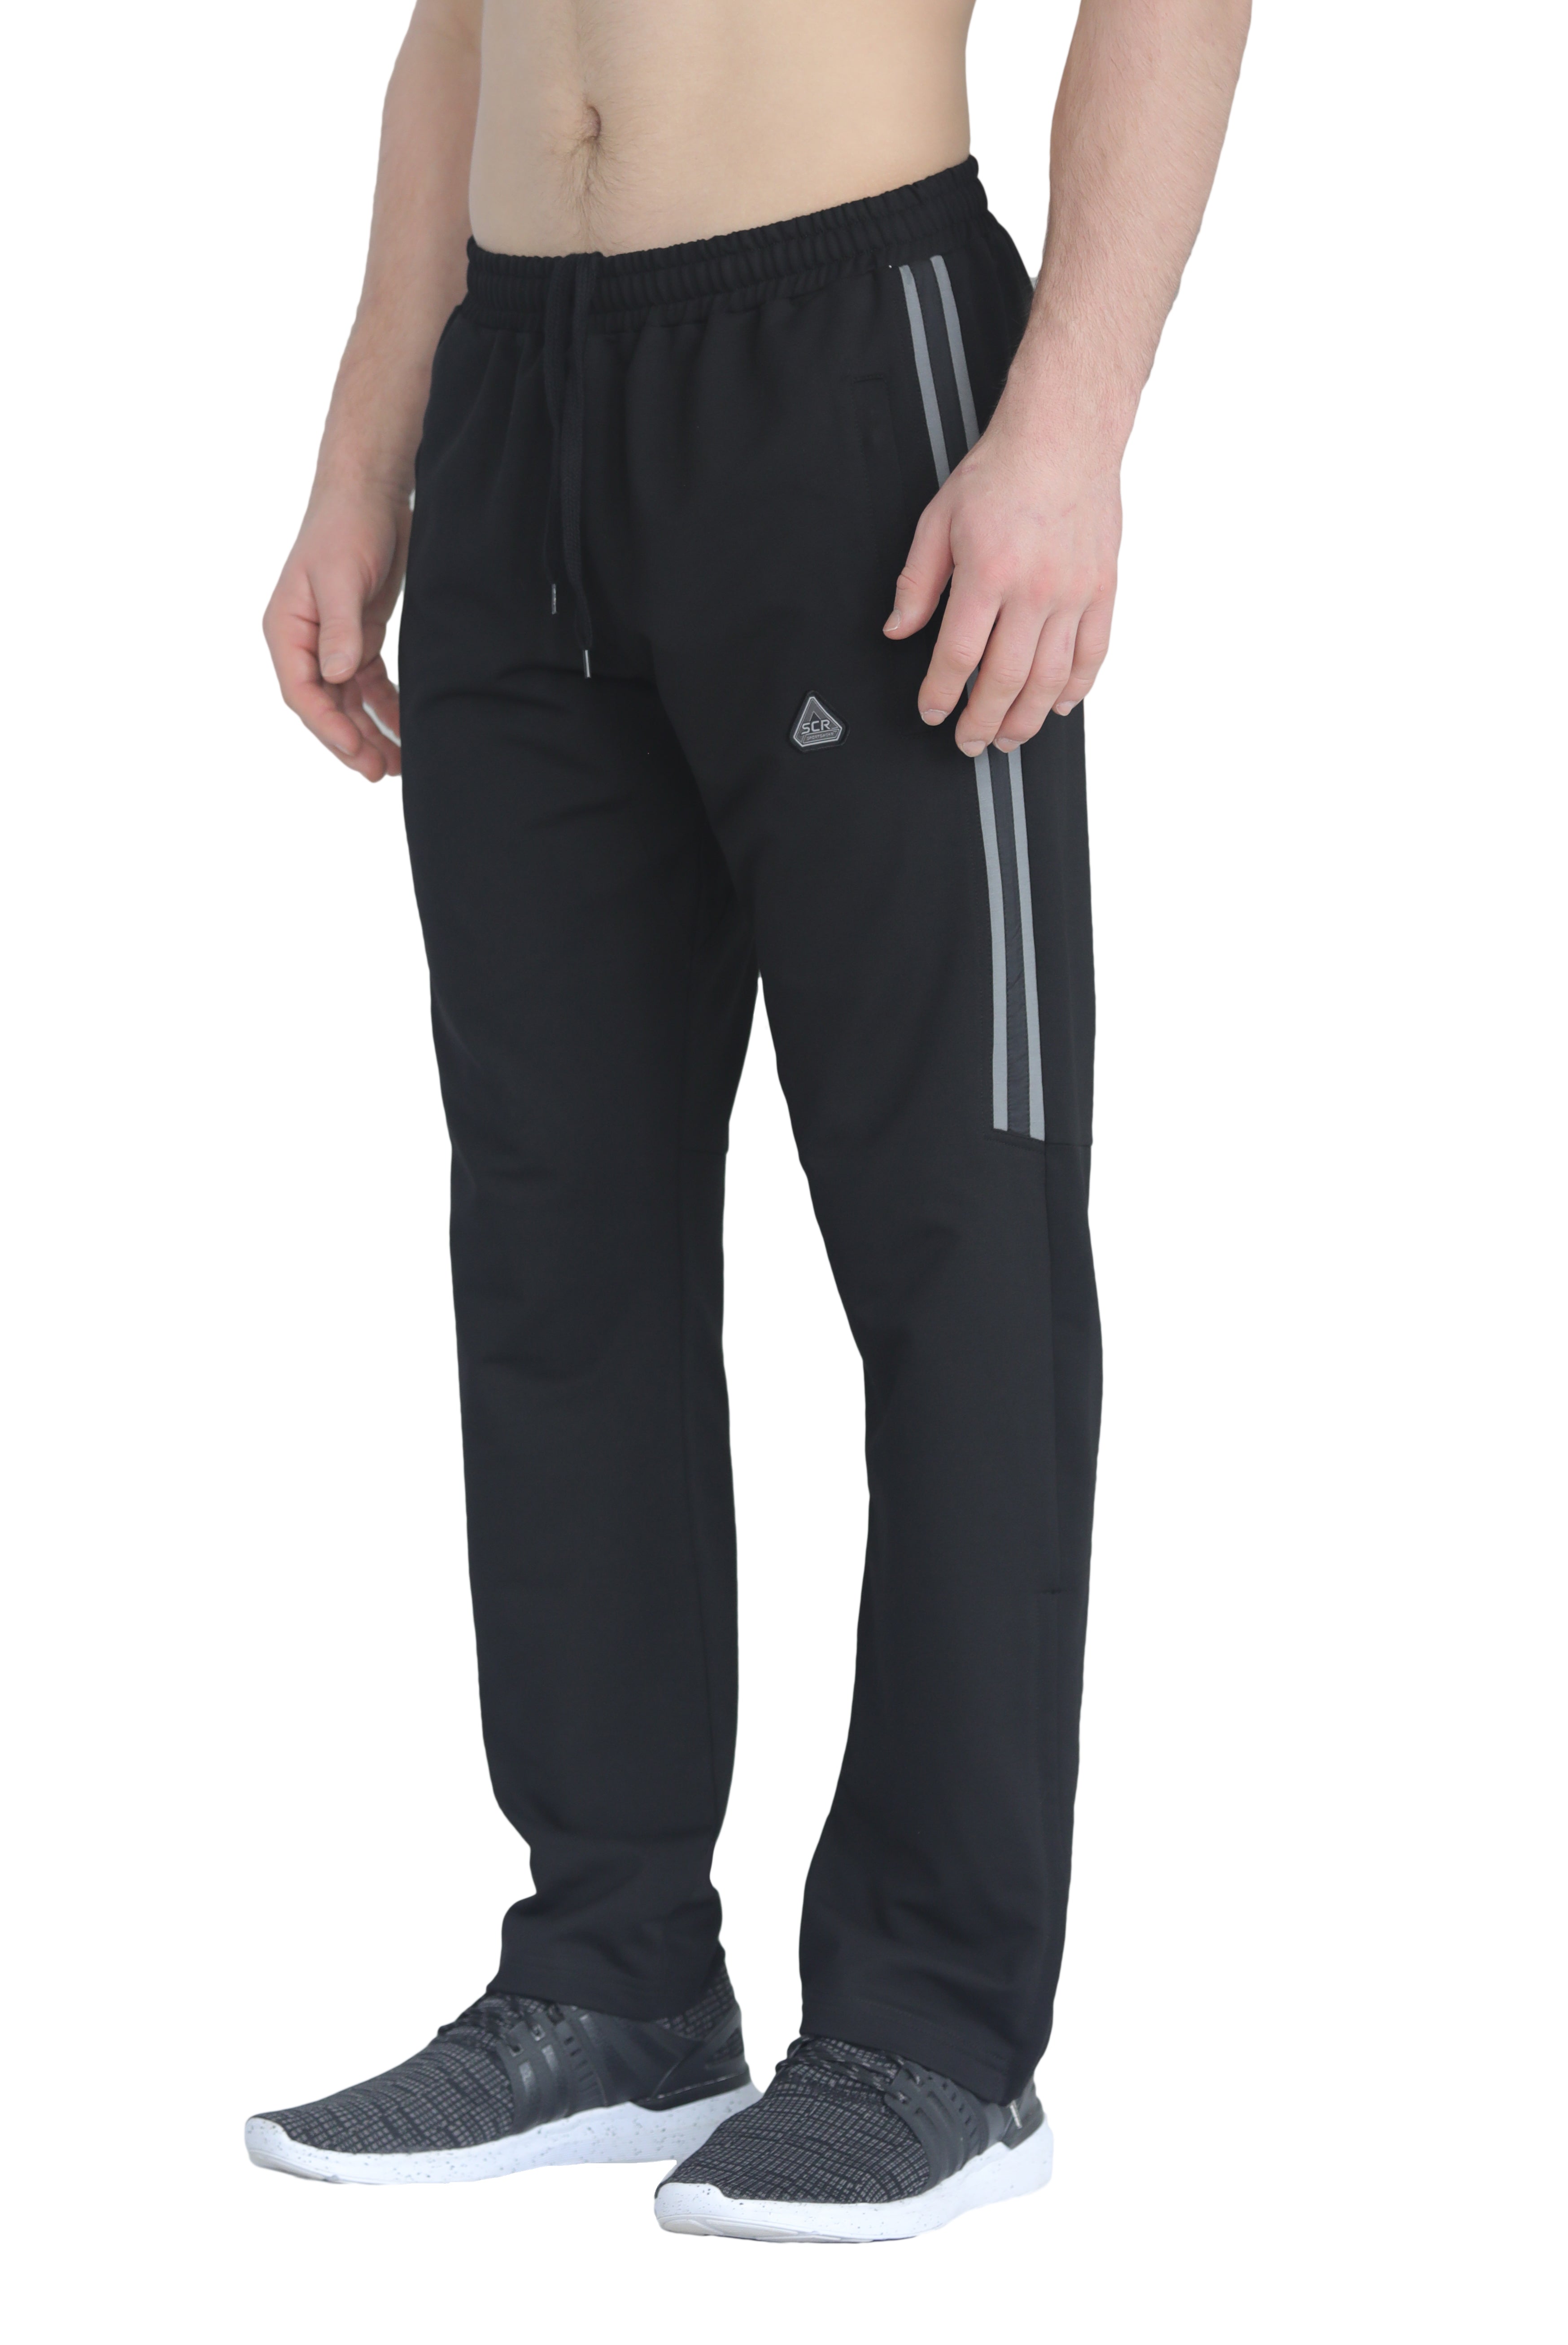  SCR SPORTSWEAR All-Day Comfort Ultimate Flex Men's Sweatpants  Training Pants Mens Casual Pants Tall Long 30/33/36 Inseam (S/34,  MDB/G-K916) : Clothing, Shoes & Jewelry